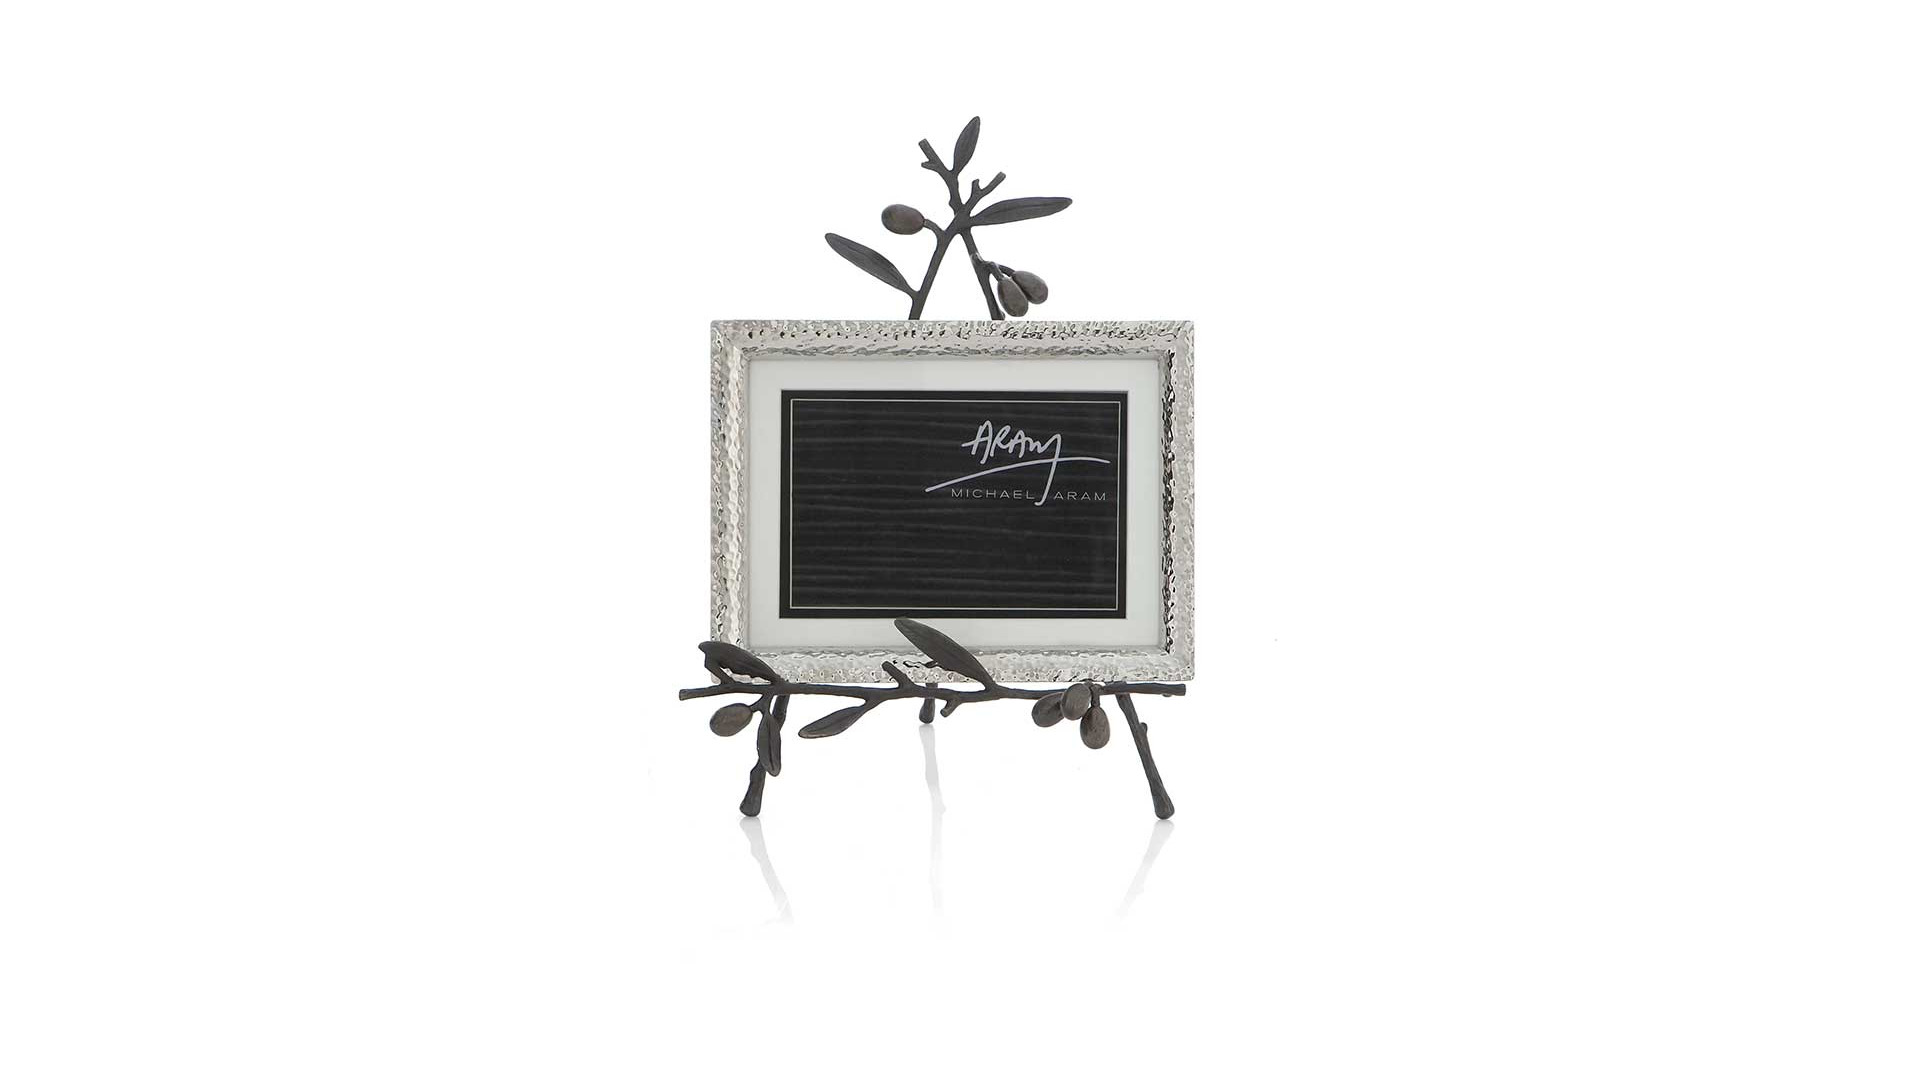 Рамка для фото на подставке Michael Aram Оливковая ветвь 13х18 см, серебристая